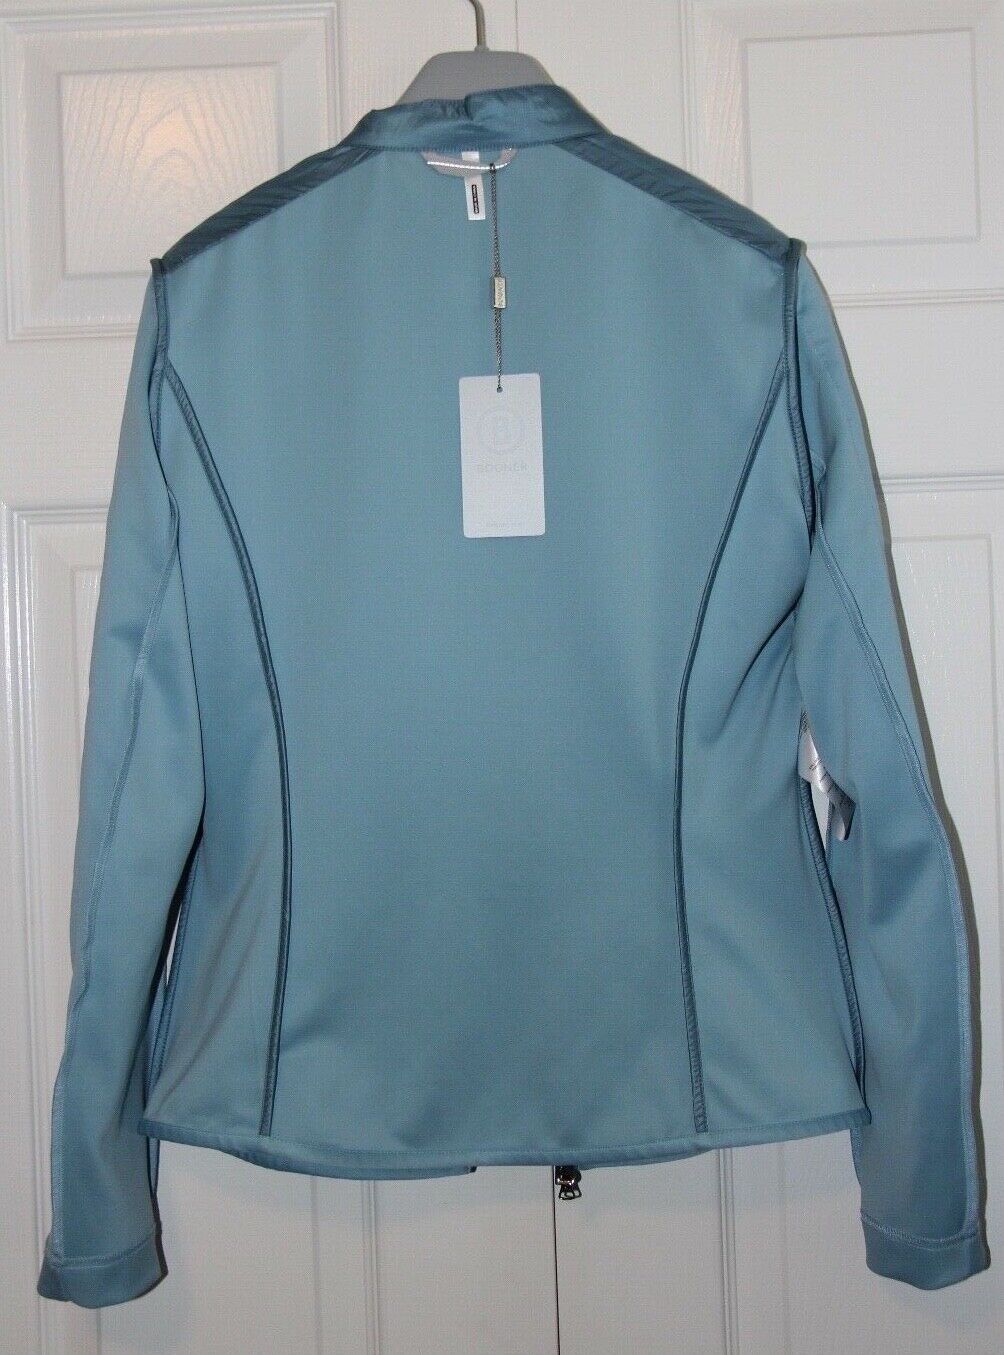 Bogner Mella Jacket Women's - Size 40 US 10 ML (Medium Large) - Slate Blue - NEW Bogner - фотография #12